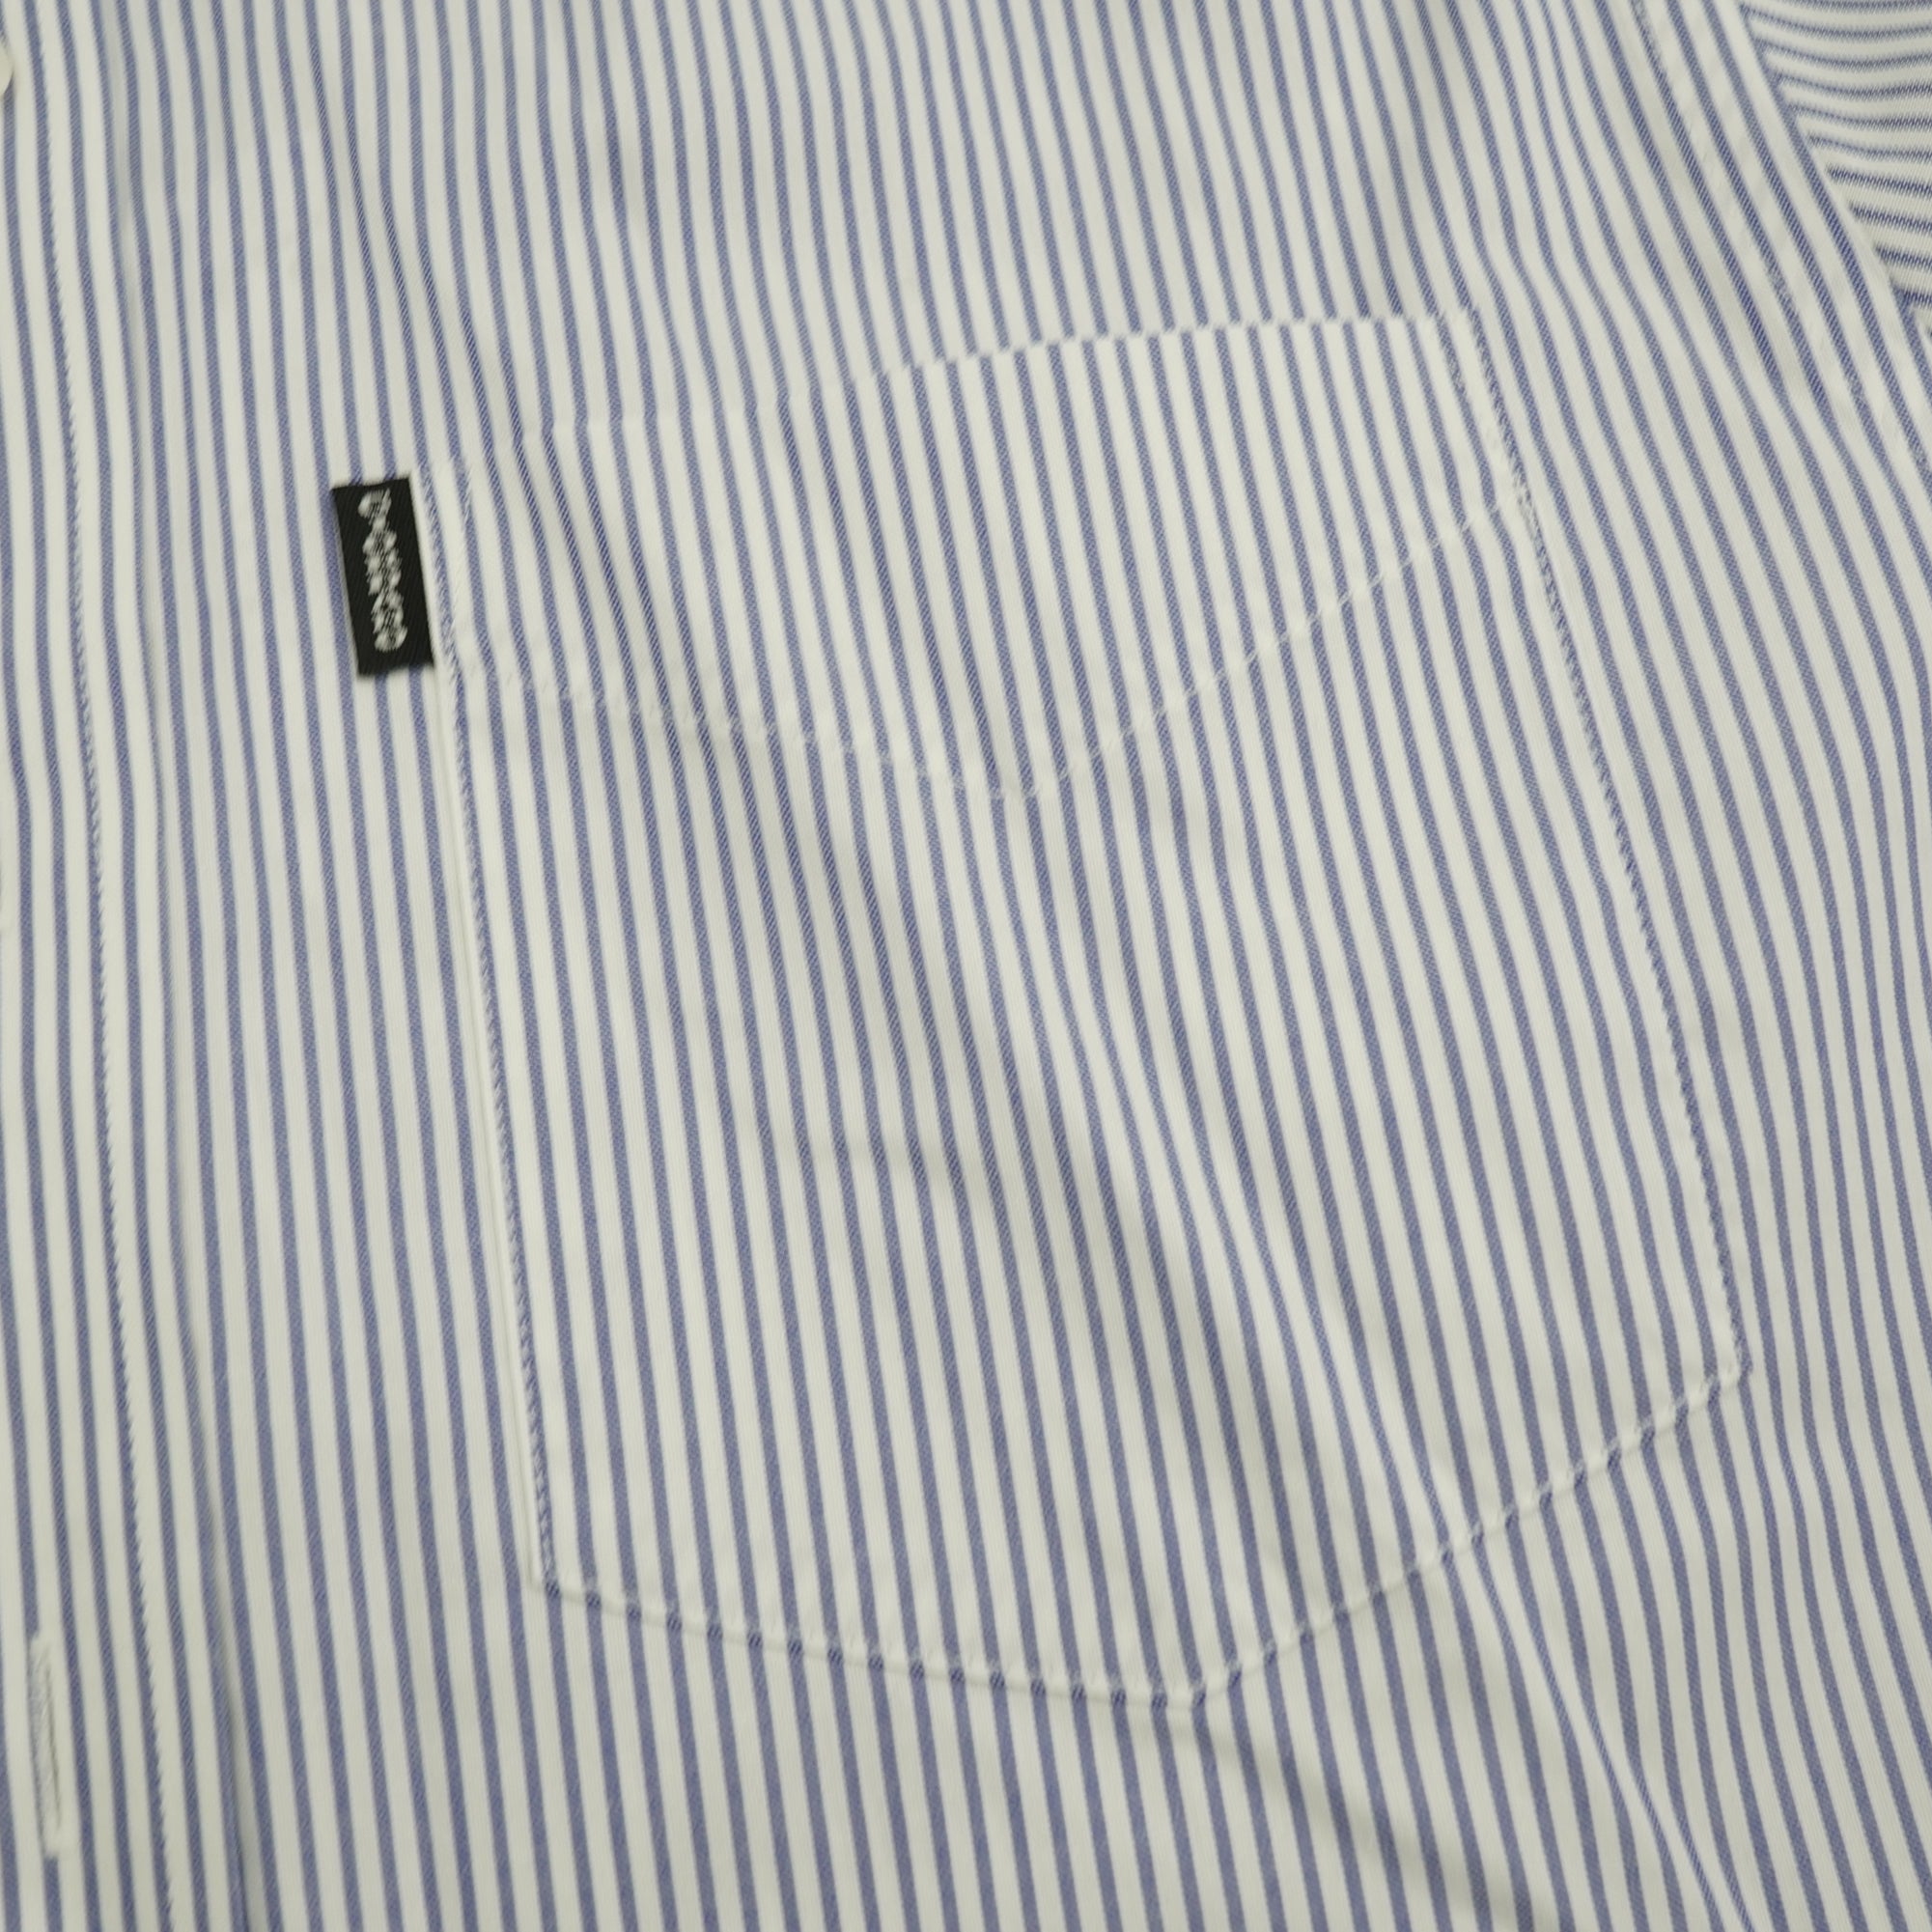 Men's Cotton Oxford Wrinkle Free Long Sleeve Shirt